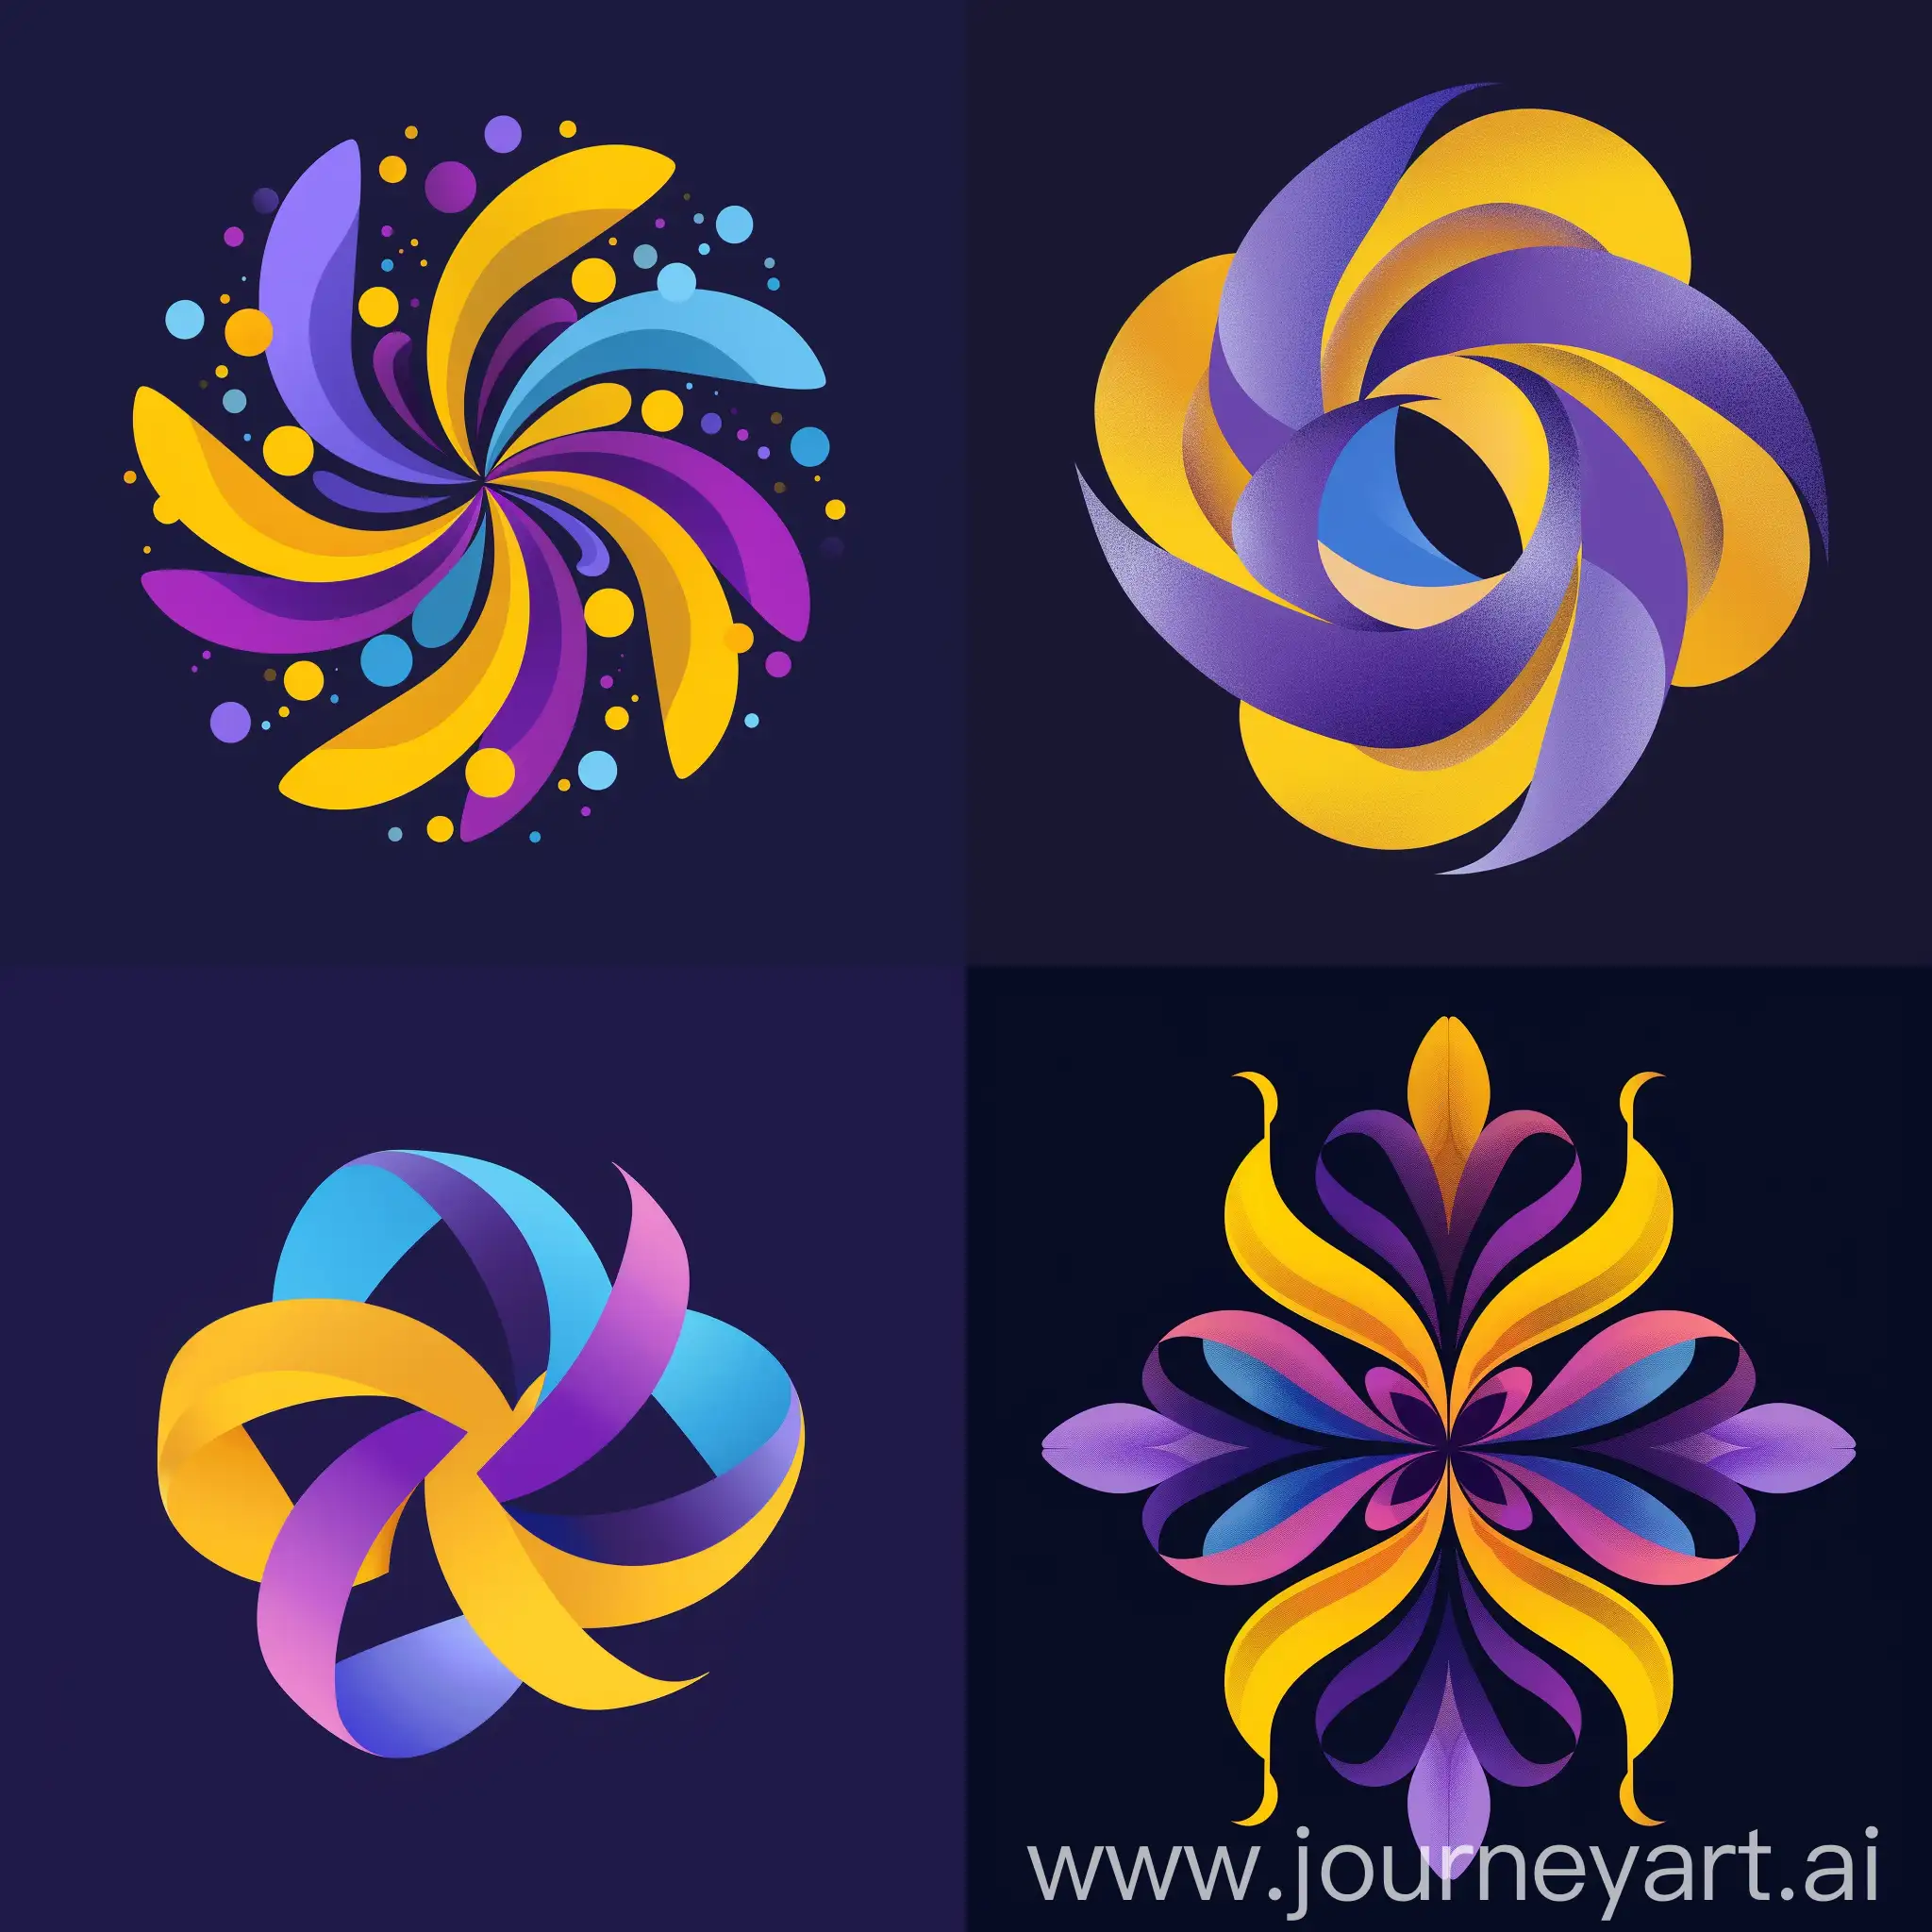 Nimaski-Challenge-Logo-in-Vibrant-Purple-Yellow-and-Blue-Colors